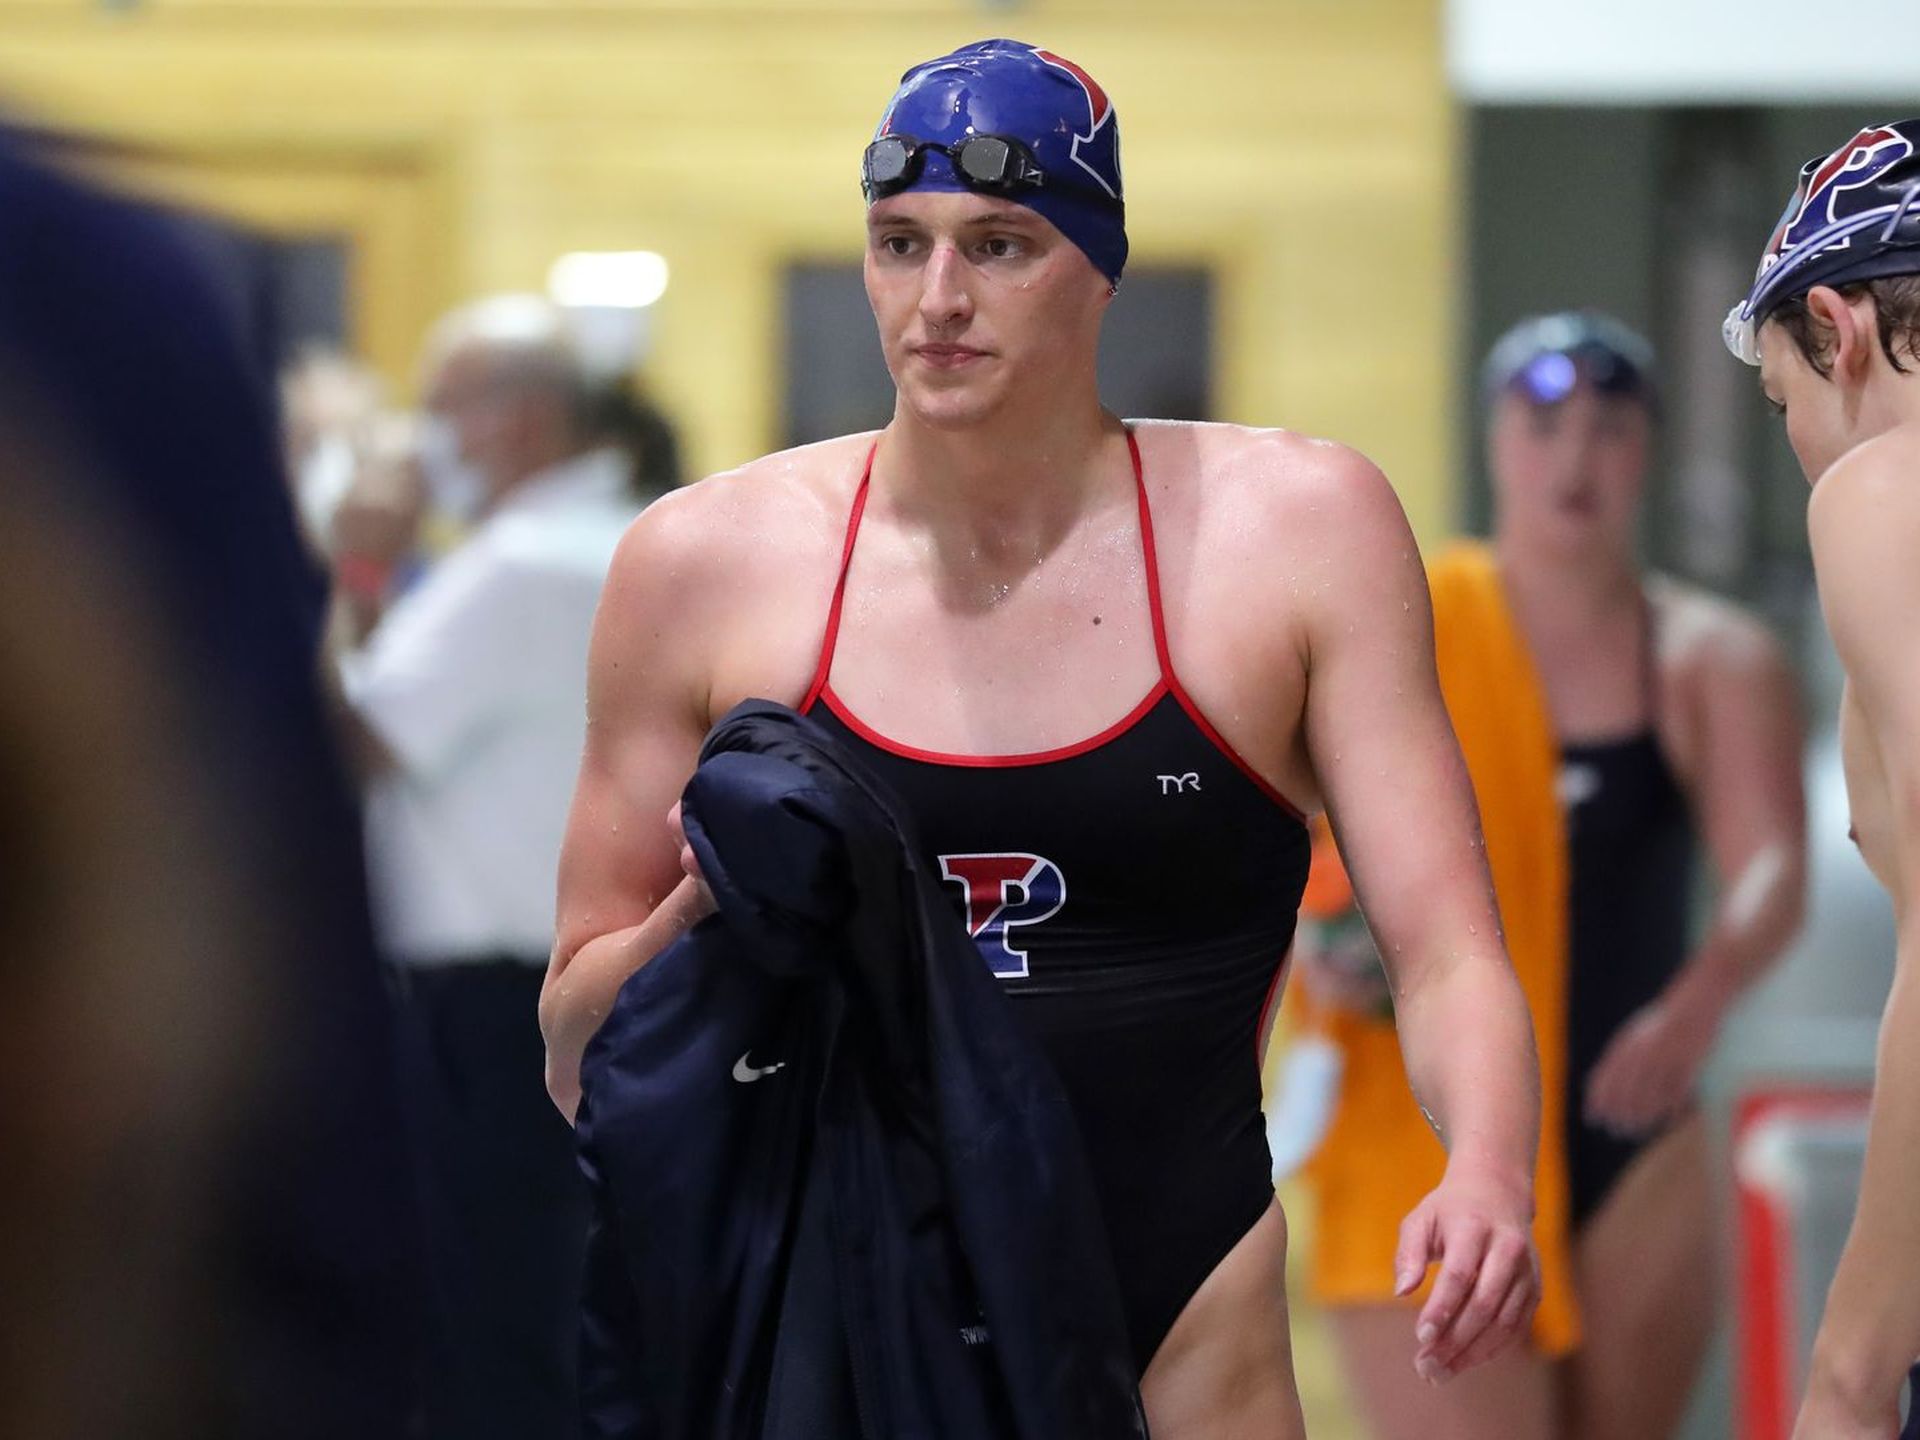 Trans Penn swimmer Lia Thomas is having a dominant season